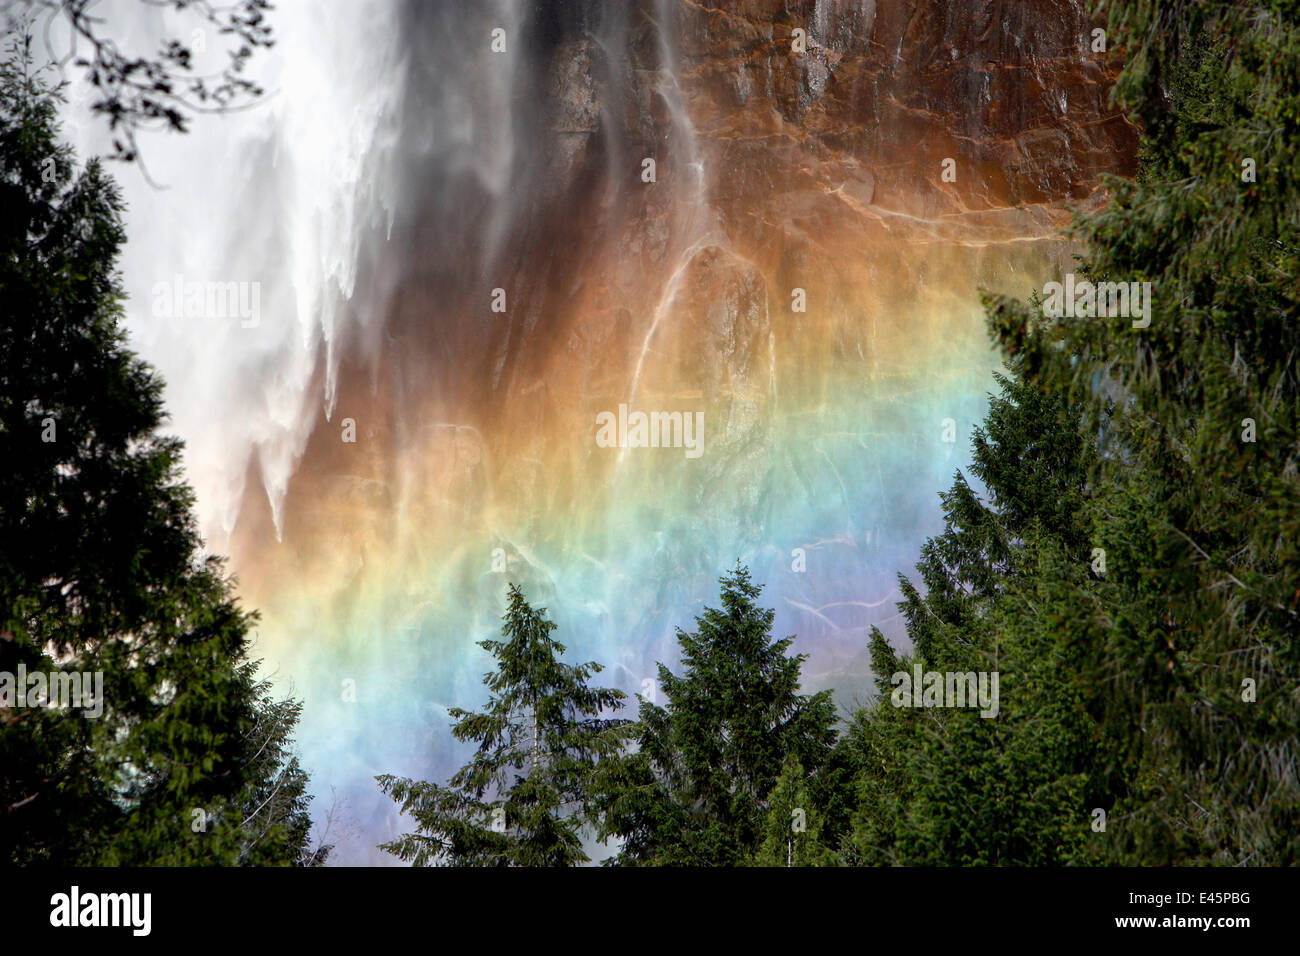 Sunlight creating a rainbow in the spray of the Bridalveil Falls, Yosemite National Park, California, USA, June 2008 Stock Photo